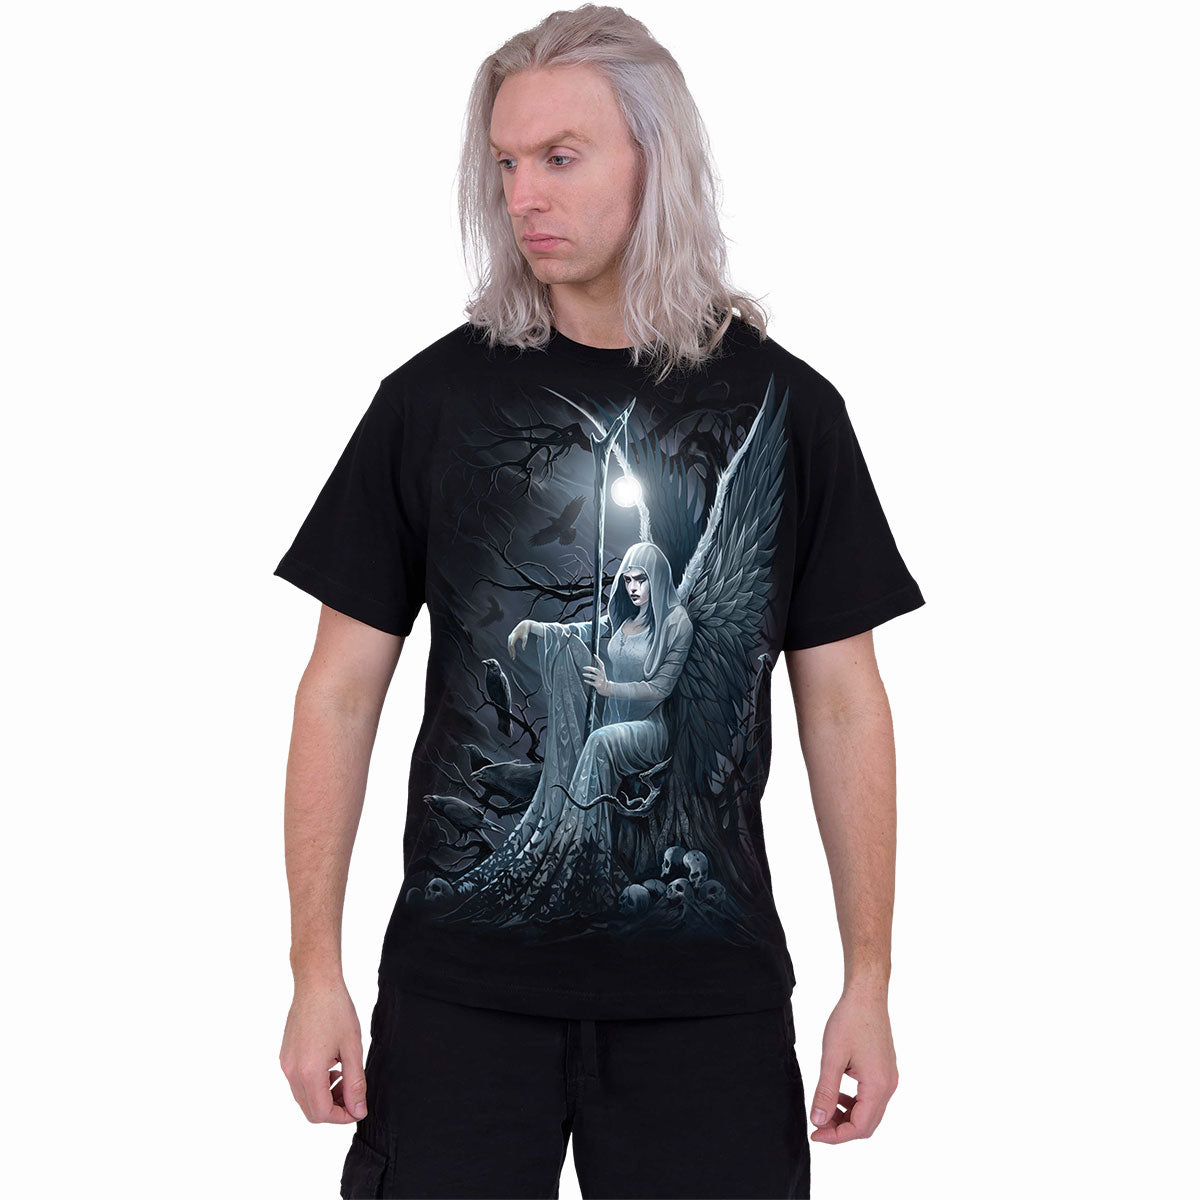 ETHEREAL ANGEL - T-Shirt Schwarz